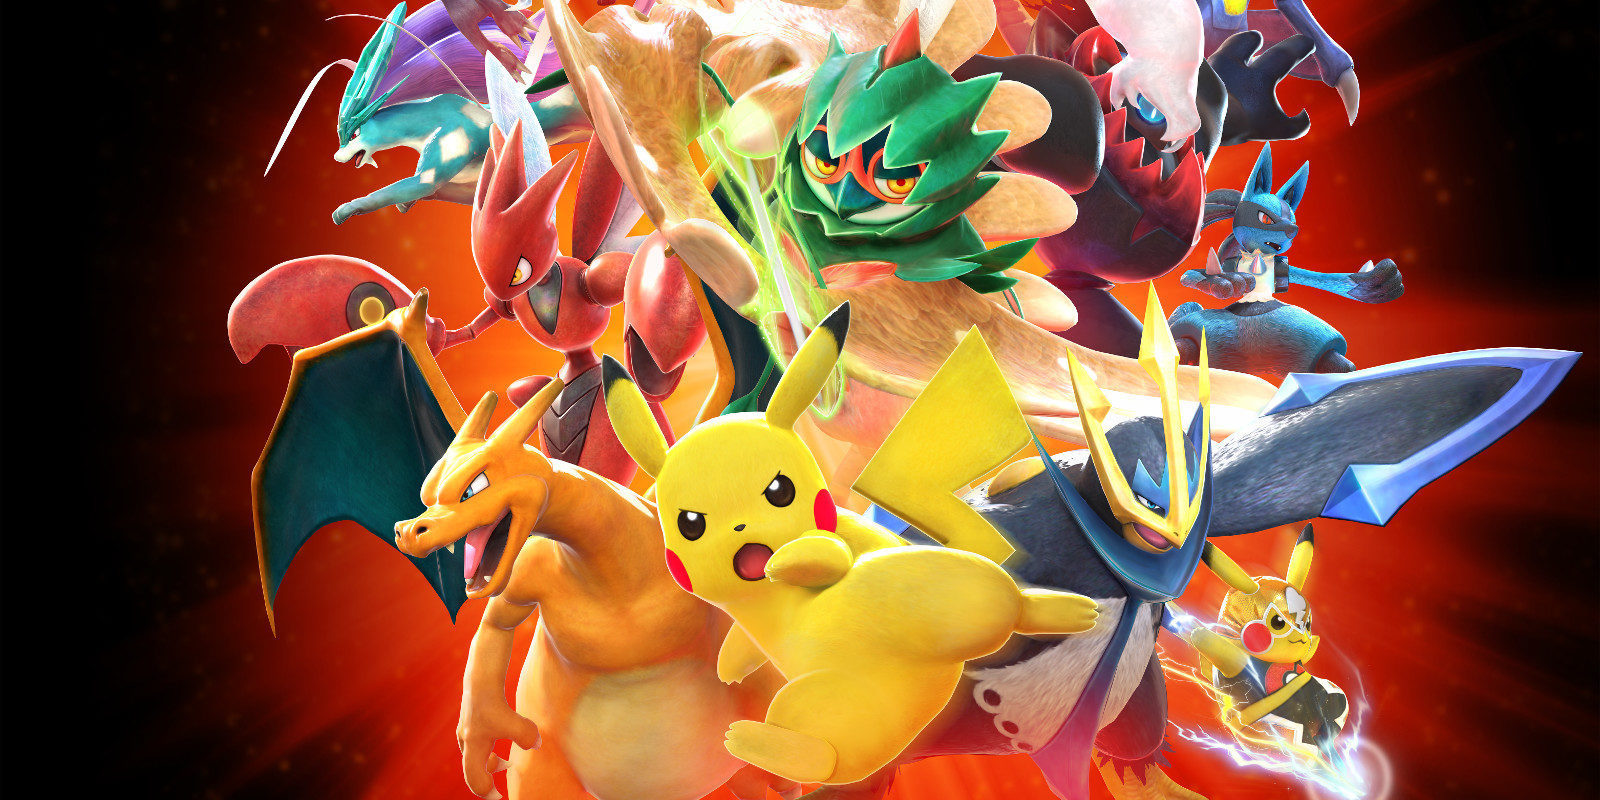 Análisis 'Pokken Torunament DX' para Nintendo Switch: Pokémon en tiempo real